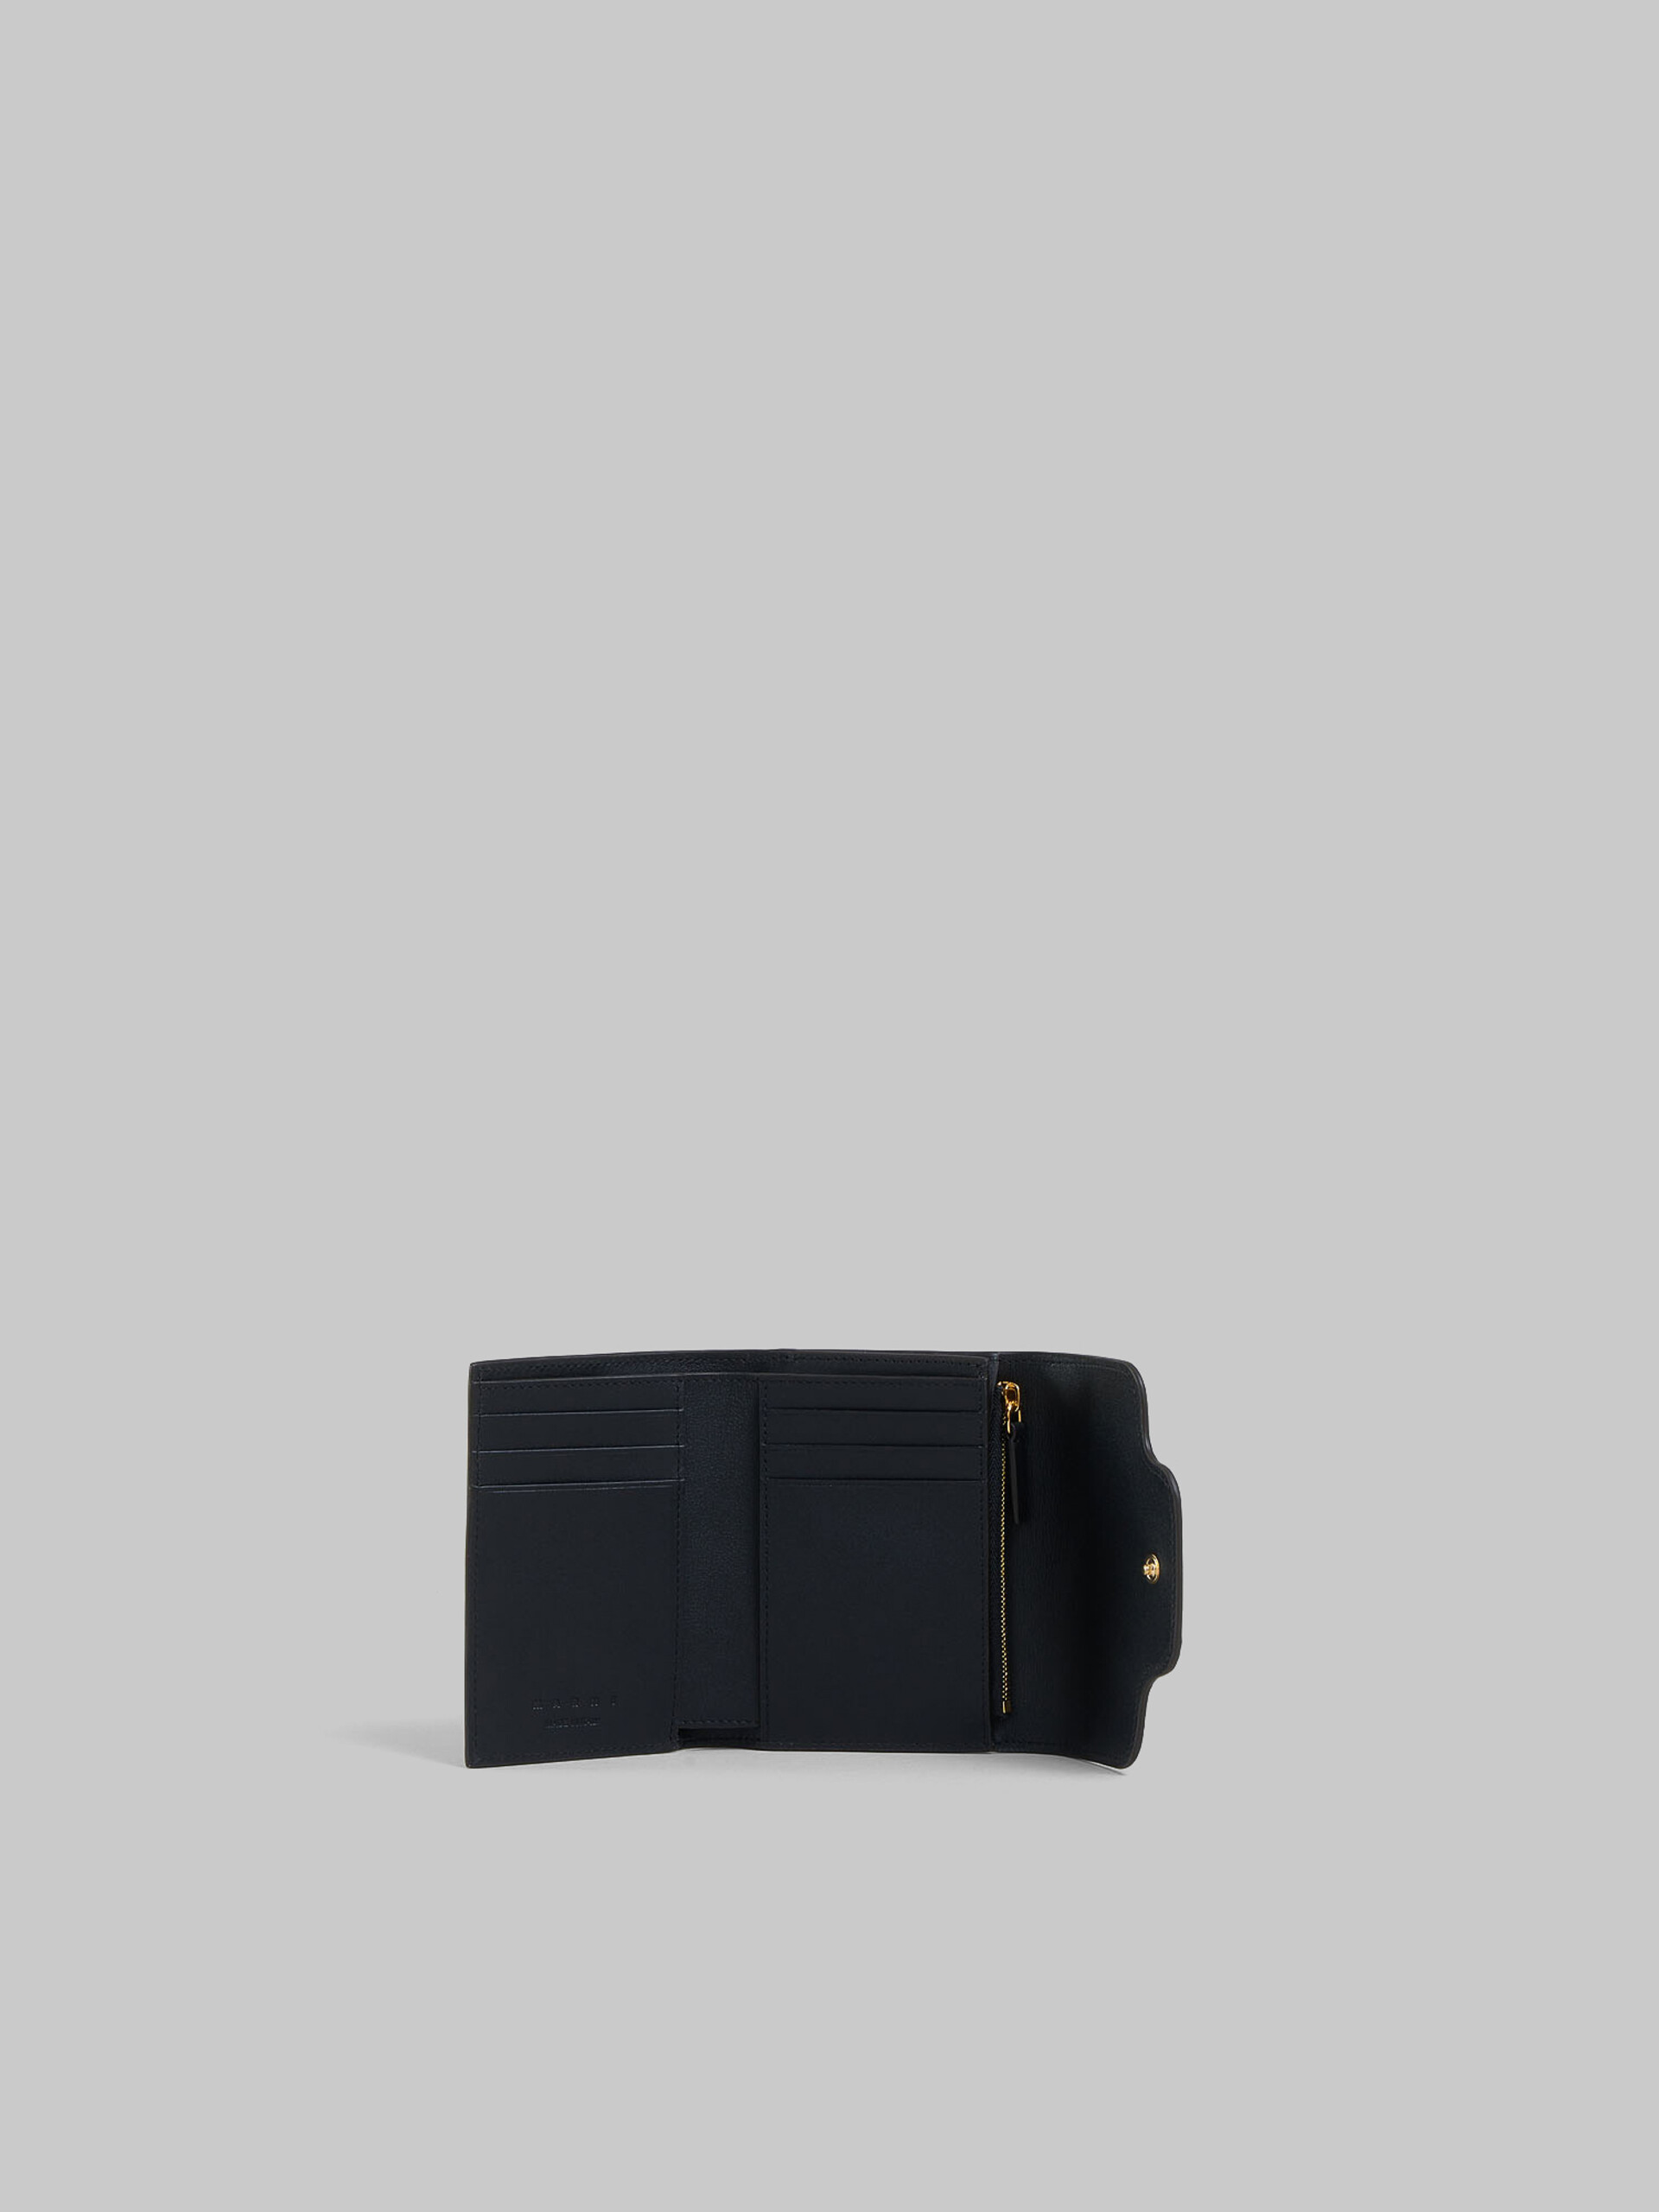 Blue leather Trunkaroo trifold wallet - Wallets - Image 2